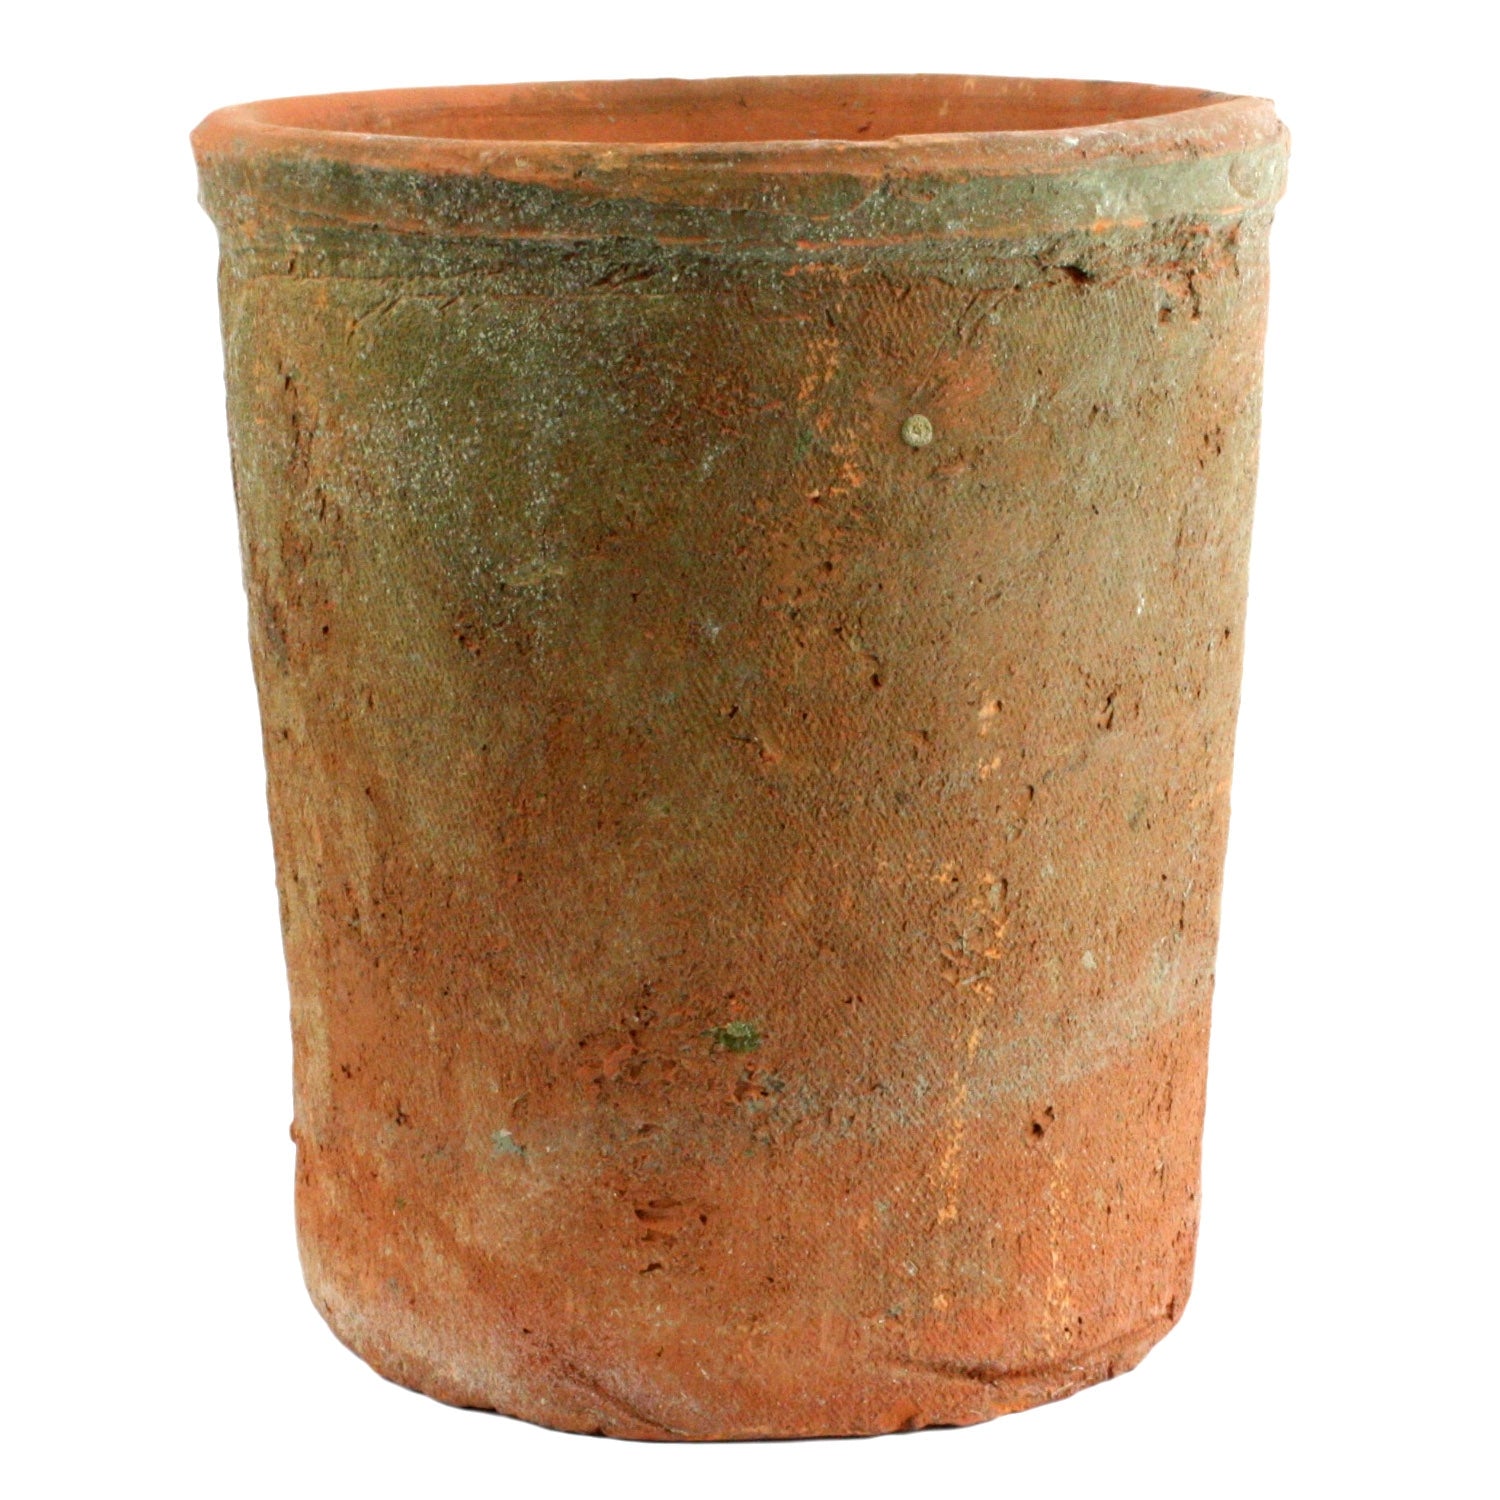 Rustic Terra Cotta Cylinder - Lrg - Antique Red (5610057400477)